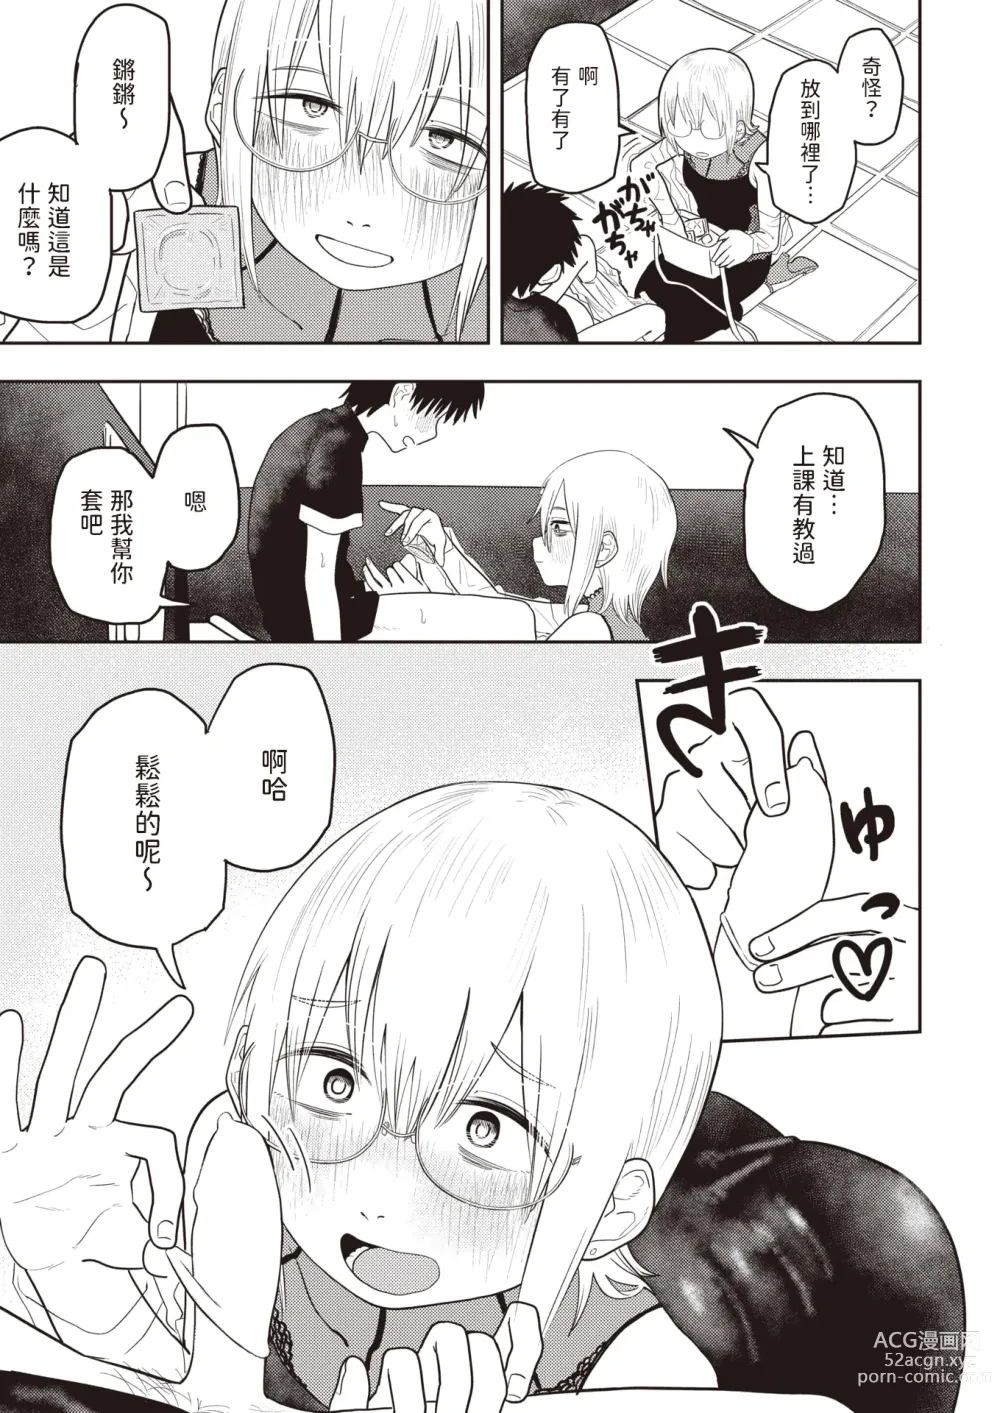 Page 13 of manga Hidoi yo Kiriyama Sensei - Thats really mean!